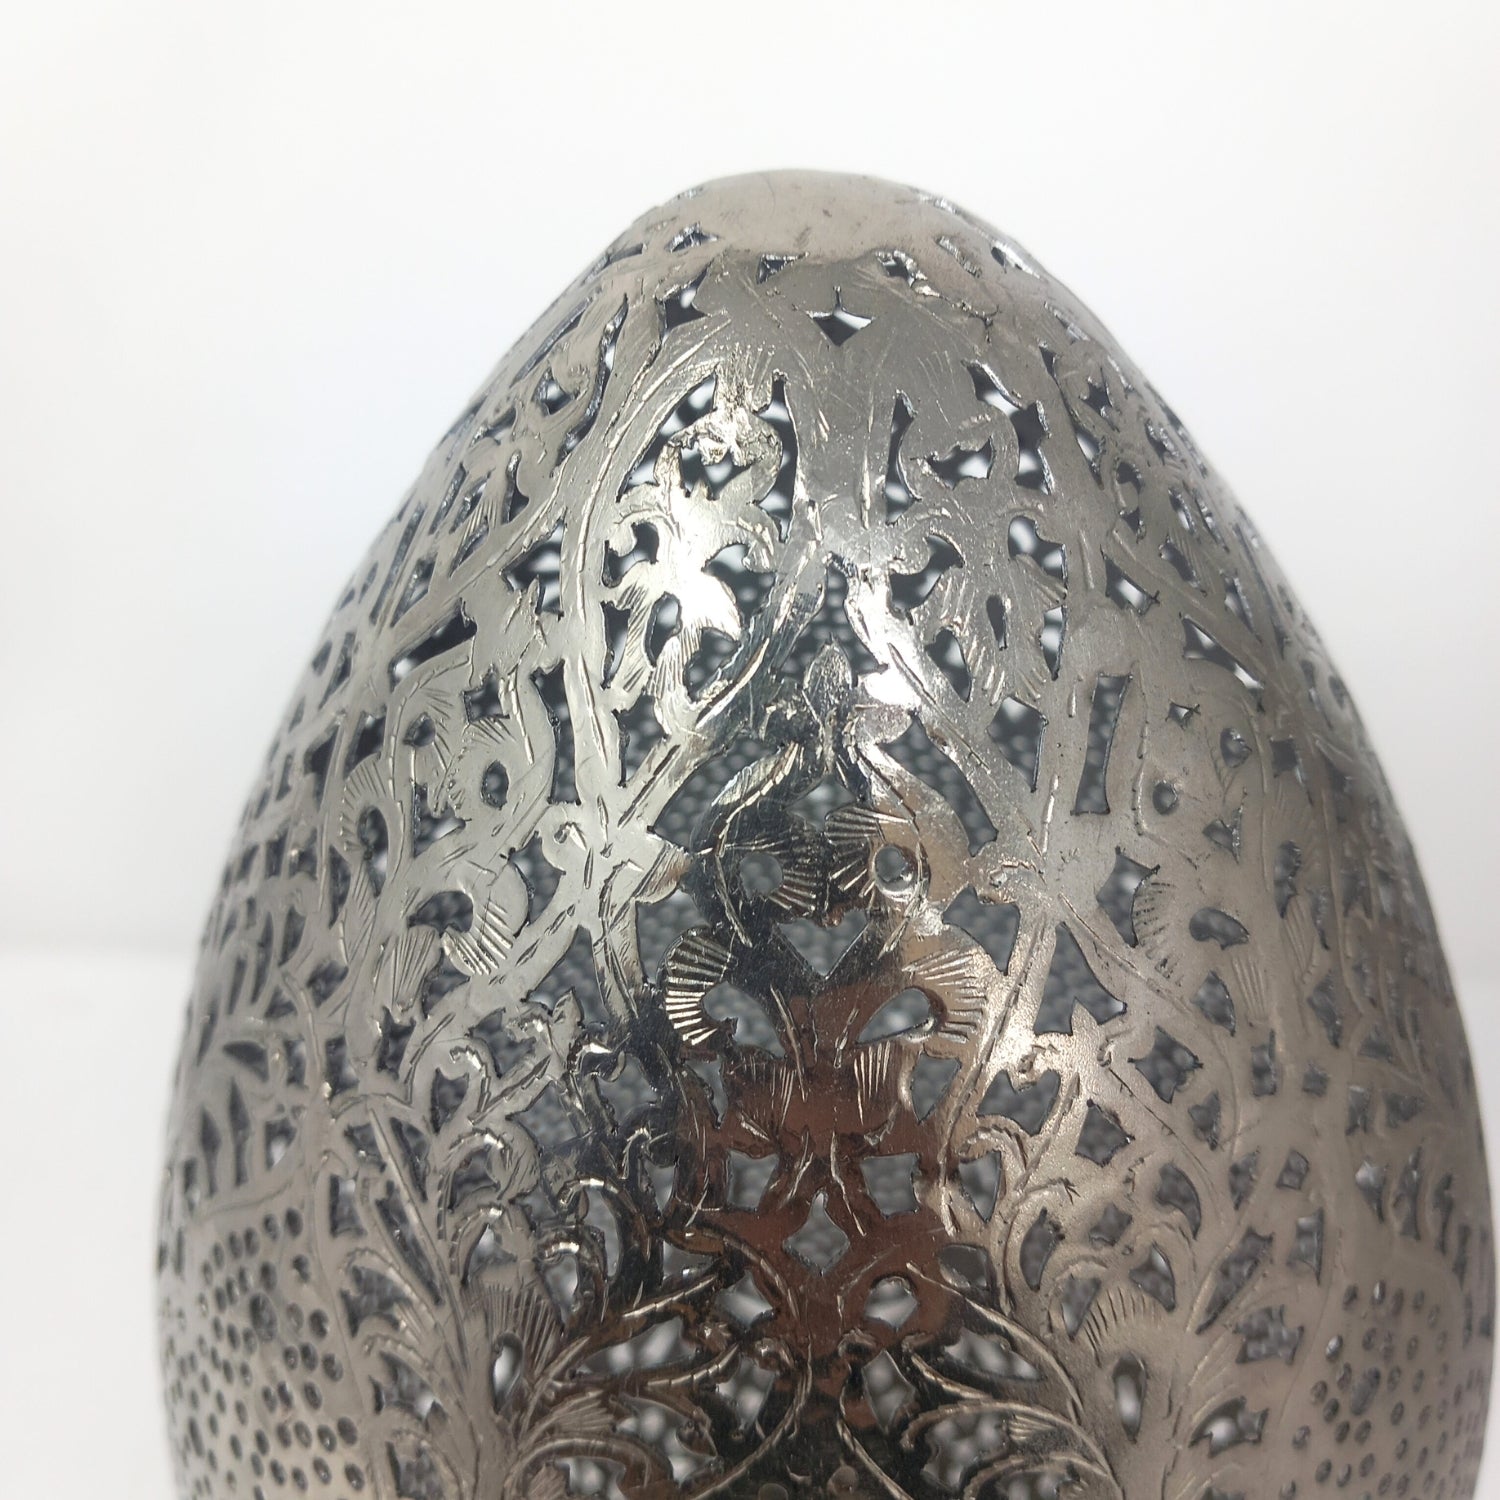 Silver Brass patterned Filigree table lamp egg shape